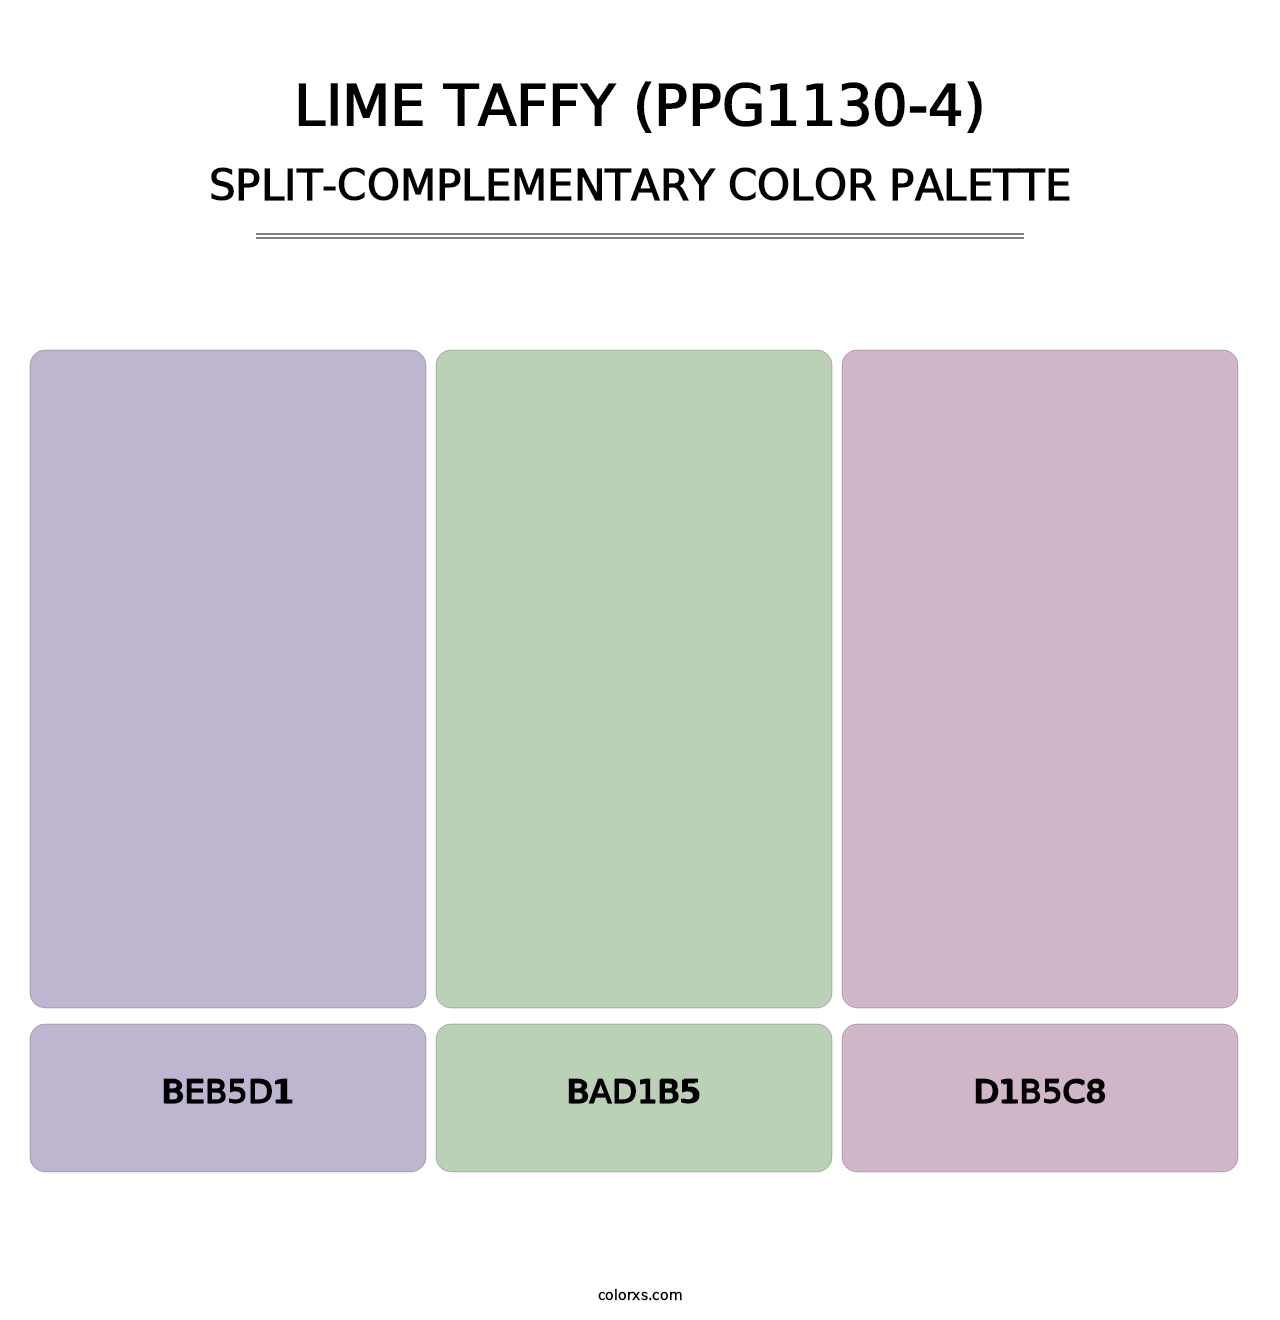 Lime Taffy (PPG1130-4) - Split-Complementary Color Palette